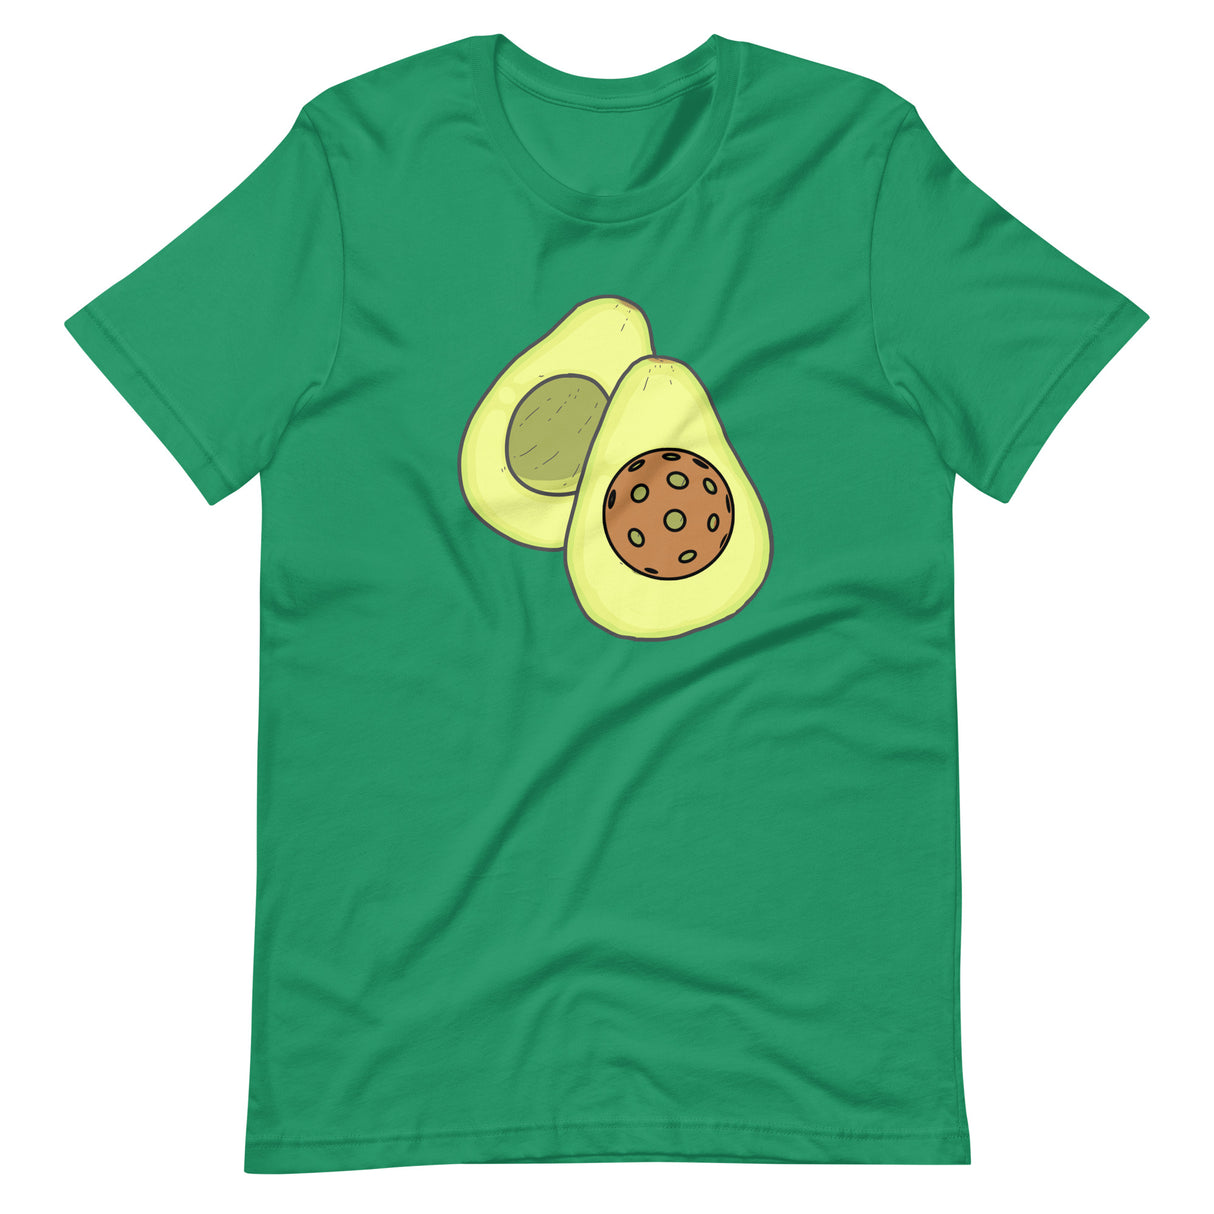 Avocado Pickleball Shirt